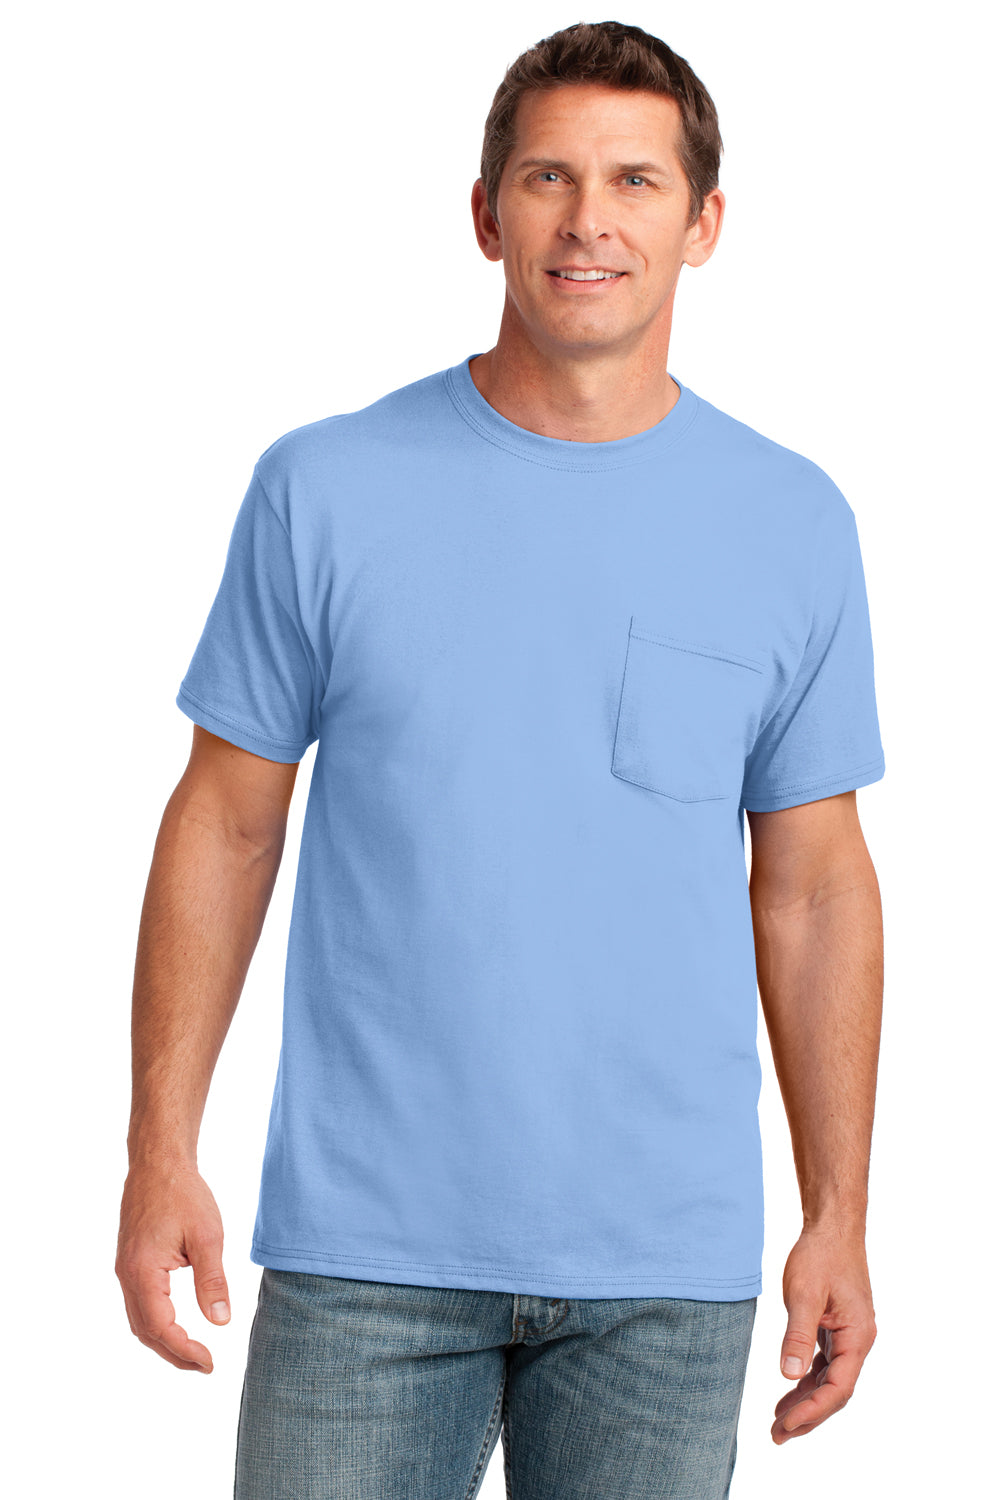 Port & Company PC54P Mens Core Short Sleeve Crewneck T-Shirt w/ Pocket Light Blue Front